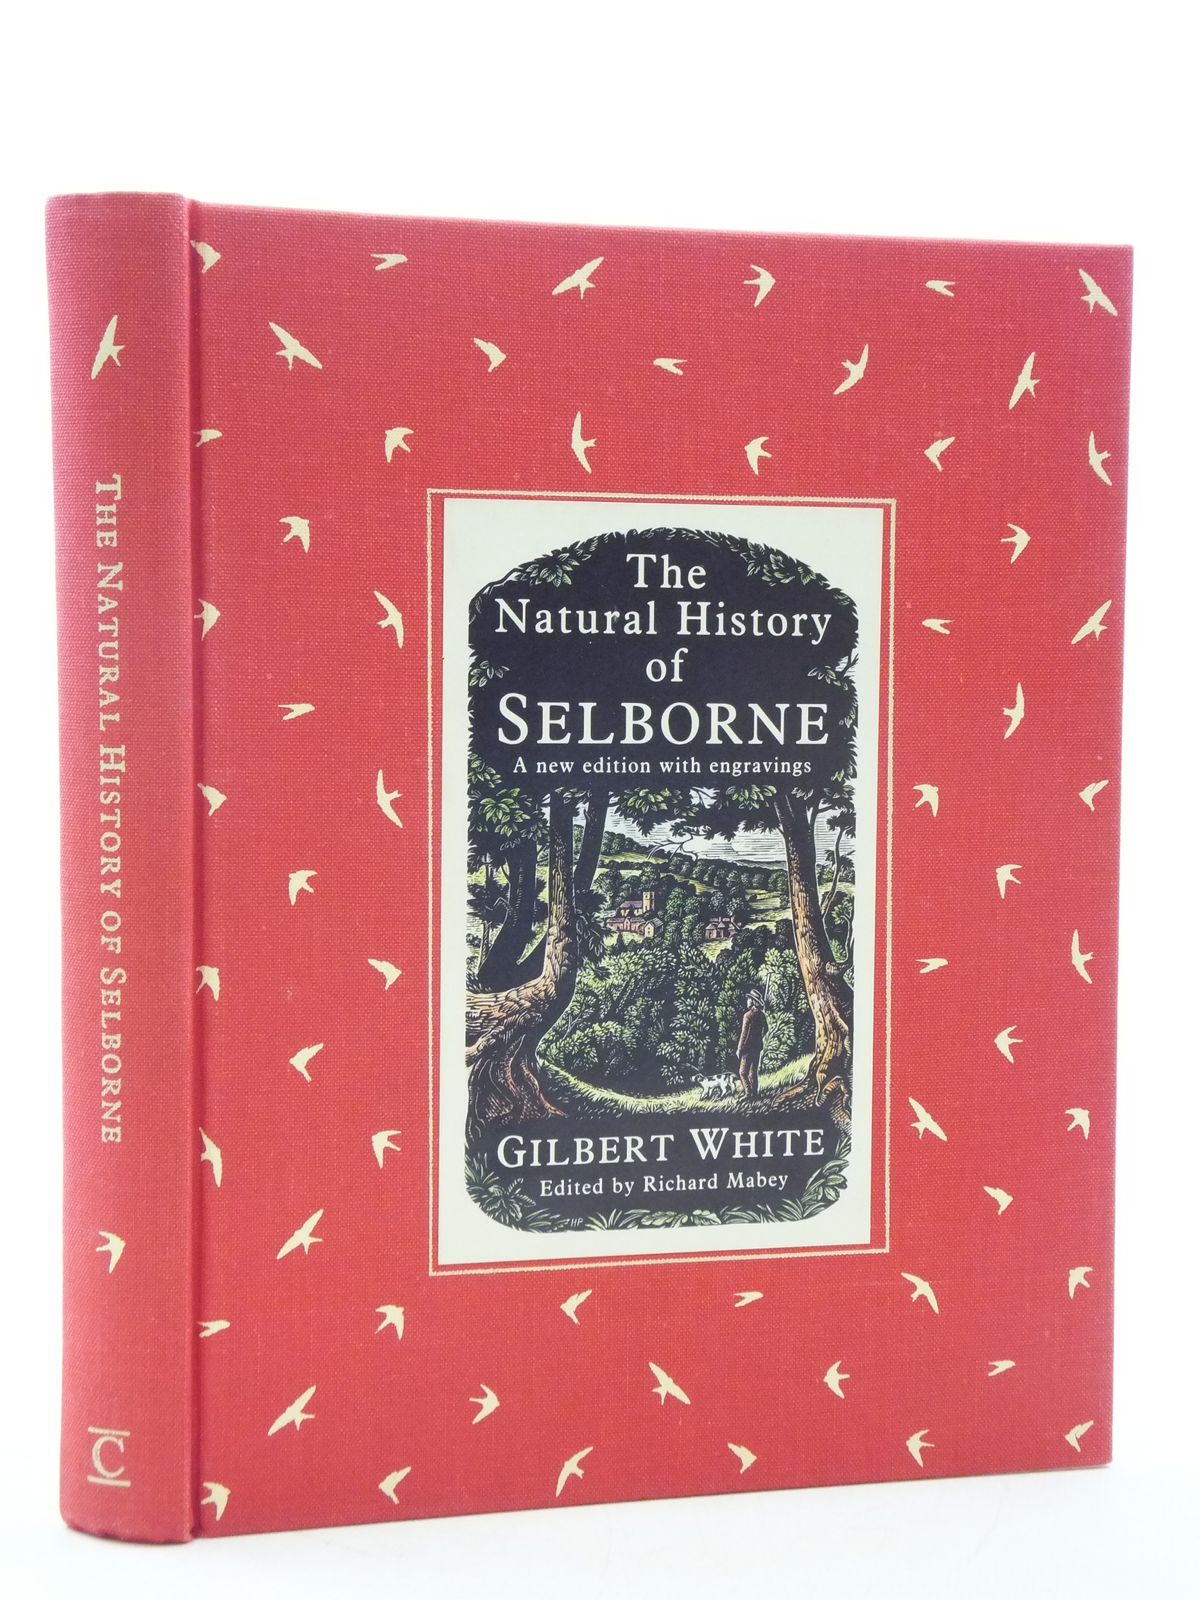 Gilbert white natural history of selborne